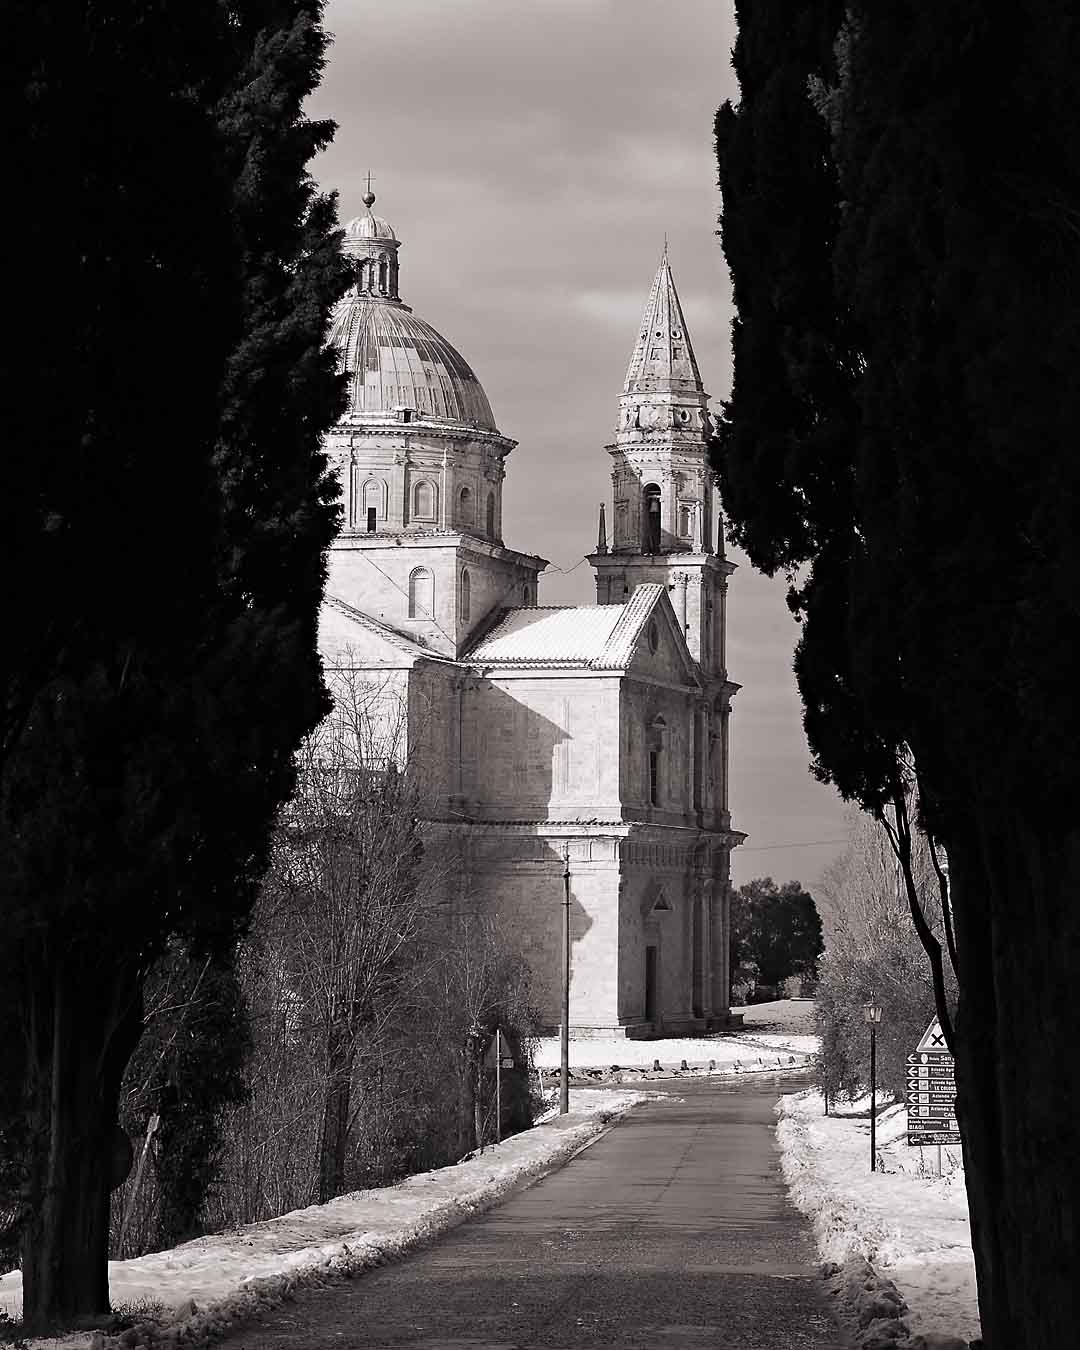 Chiesa di San Biagio #6, Montepulciano, Italy, 2008